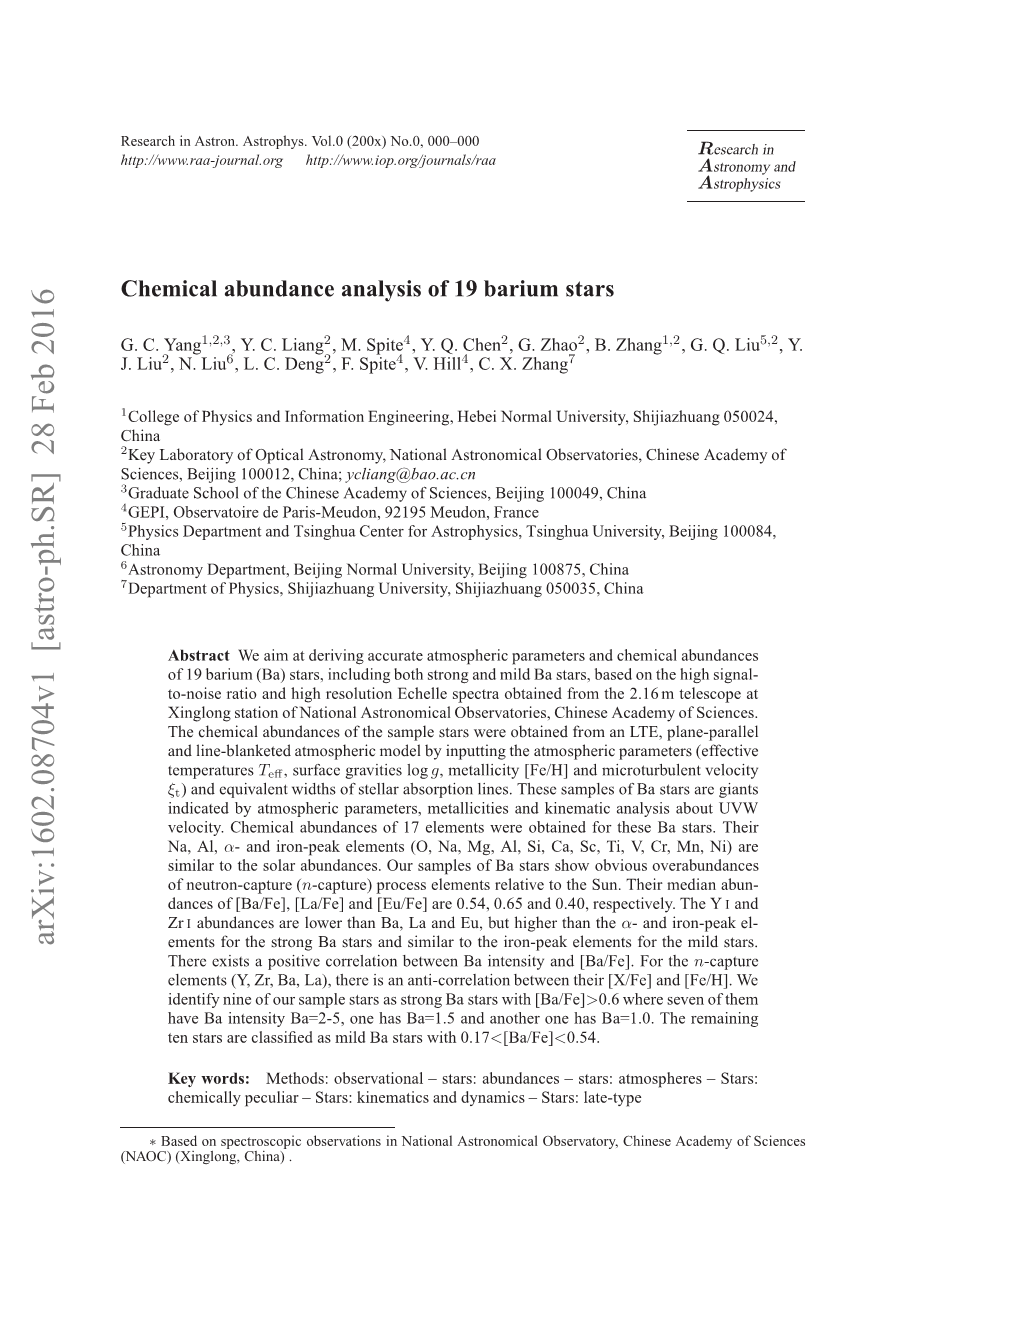 Chemical Abundance Analysis of 19 Barium Stars 3